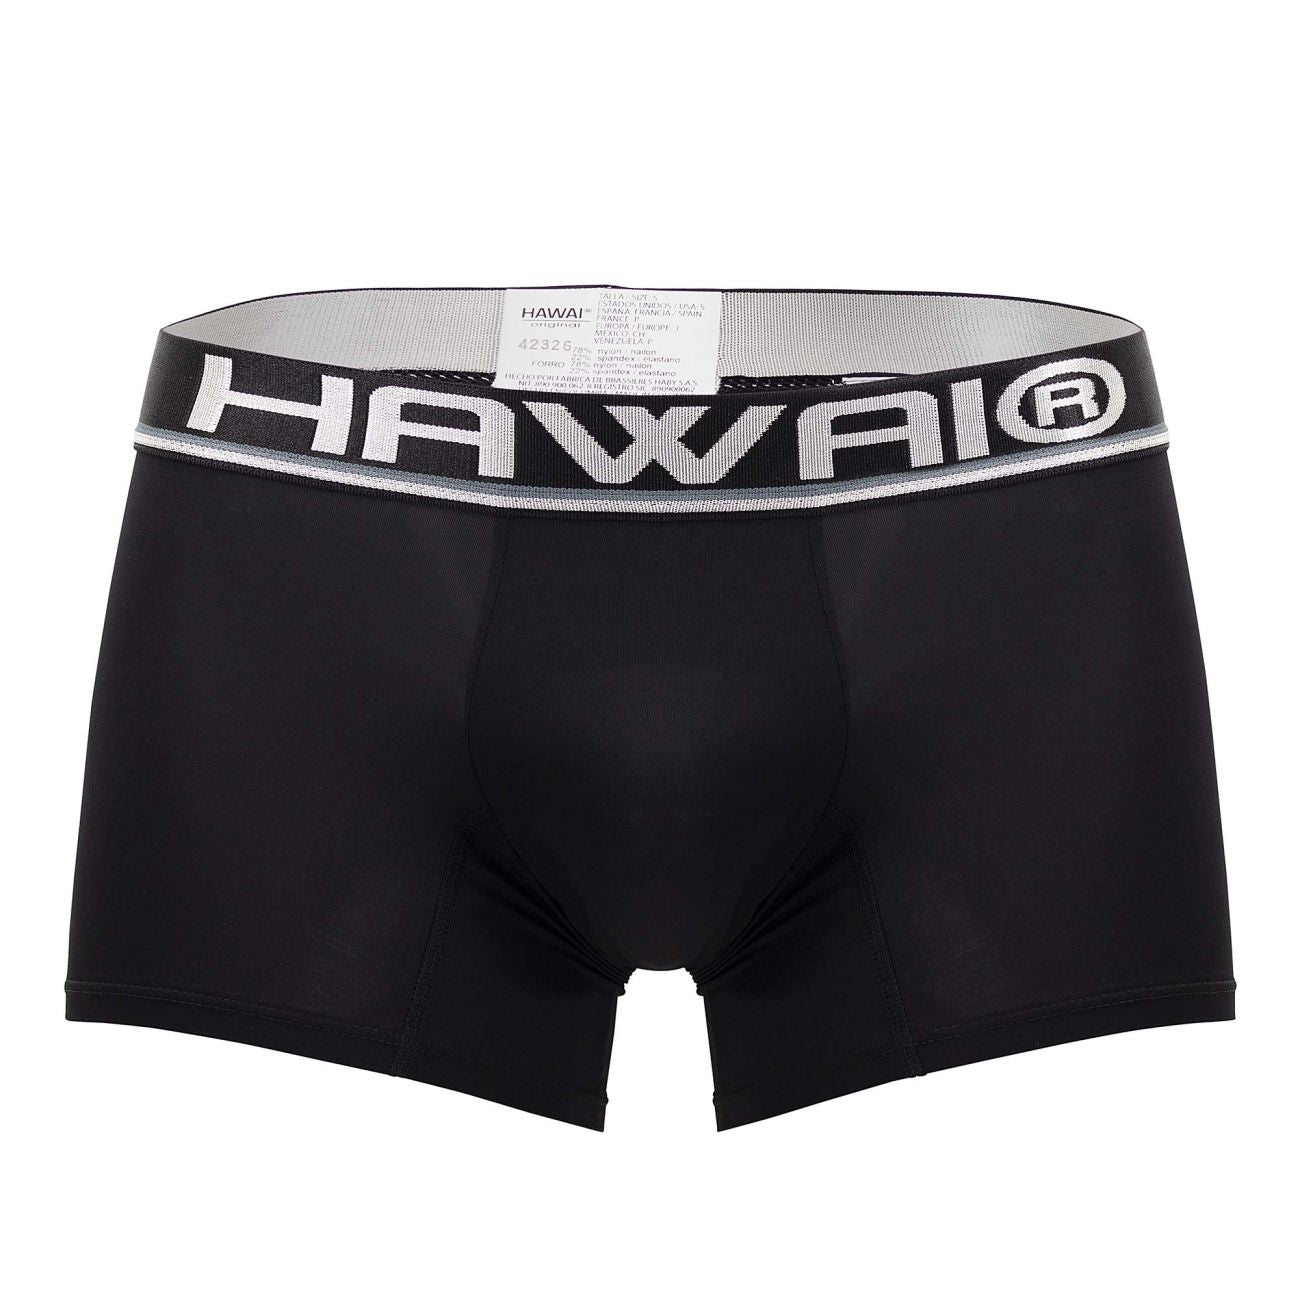 HAWAI 42326 Microfiber Boxer Briefs